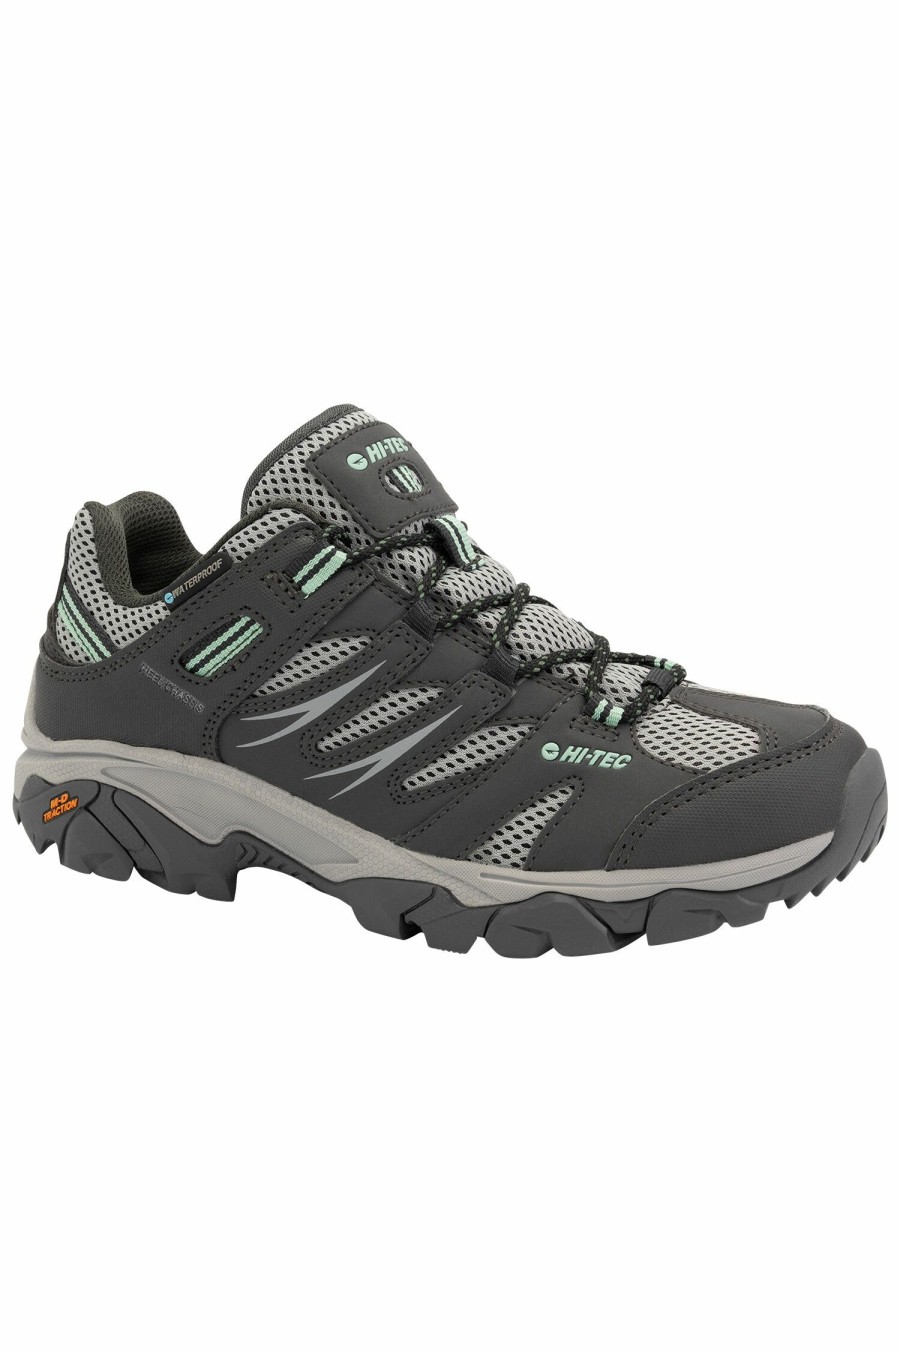 Womens Macpac Hiking Shoes | Hi-Tec Women'S Tarantula Low Wp Hiking ...